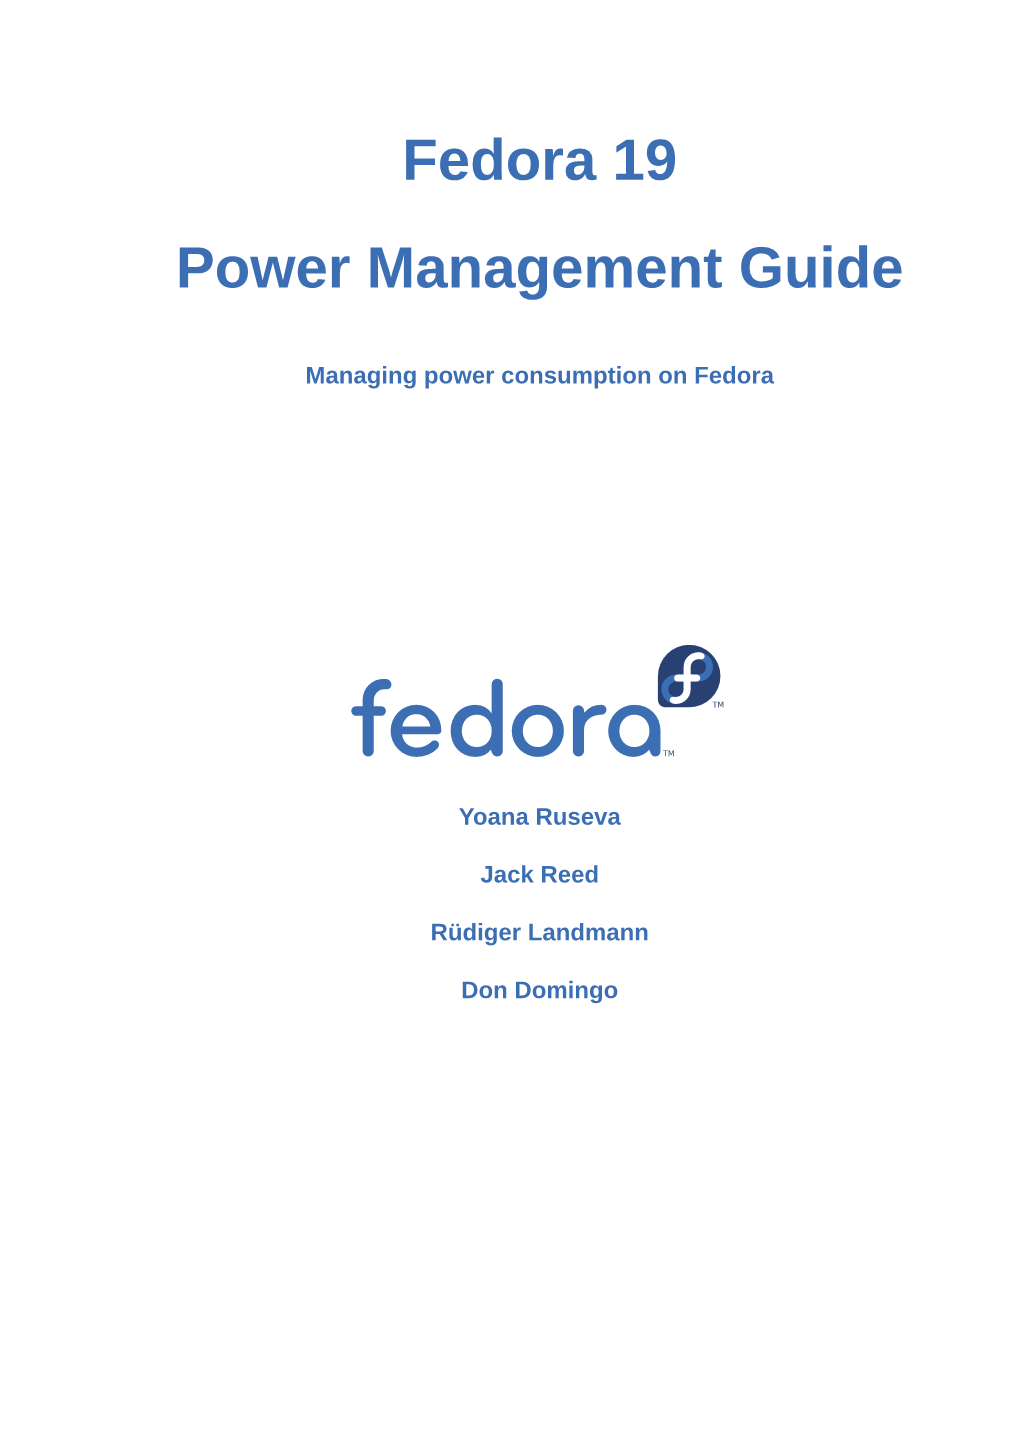 Fedora 19 Power Management Guide